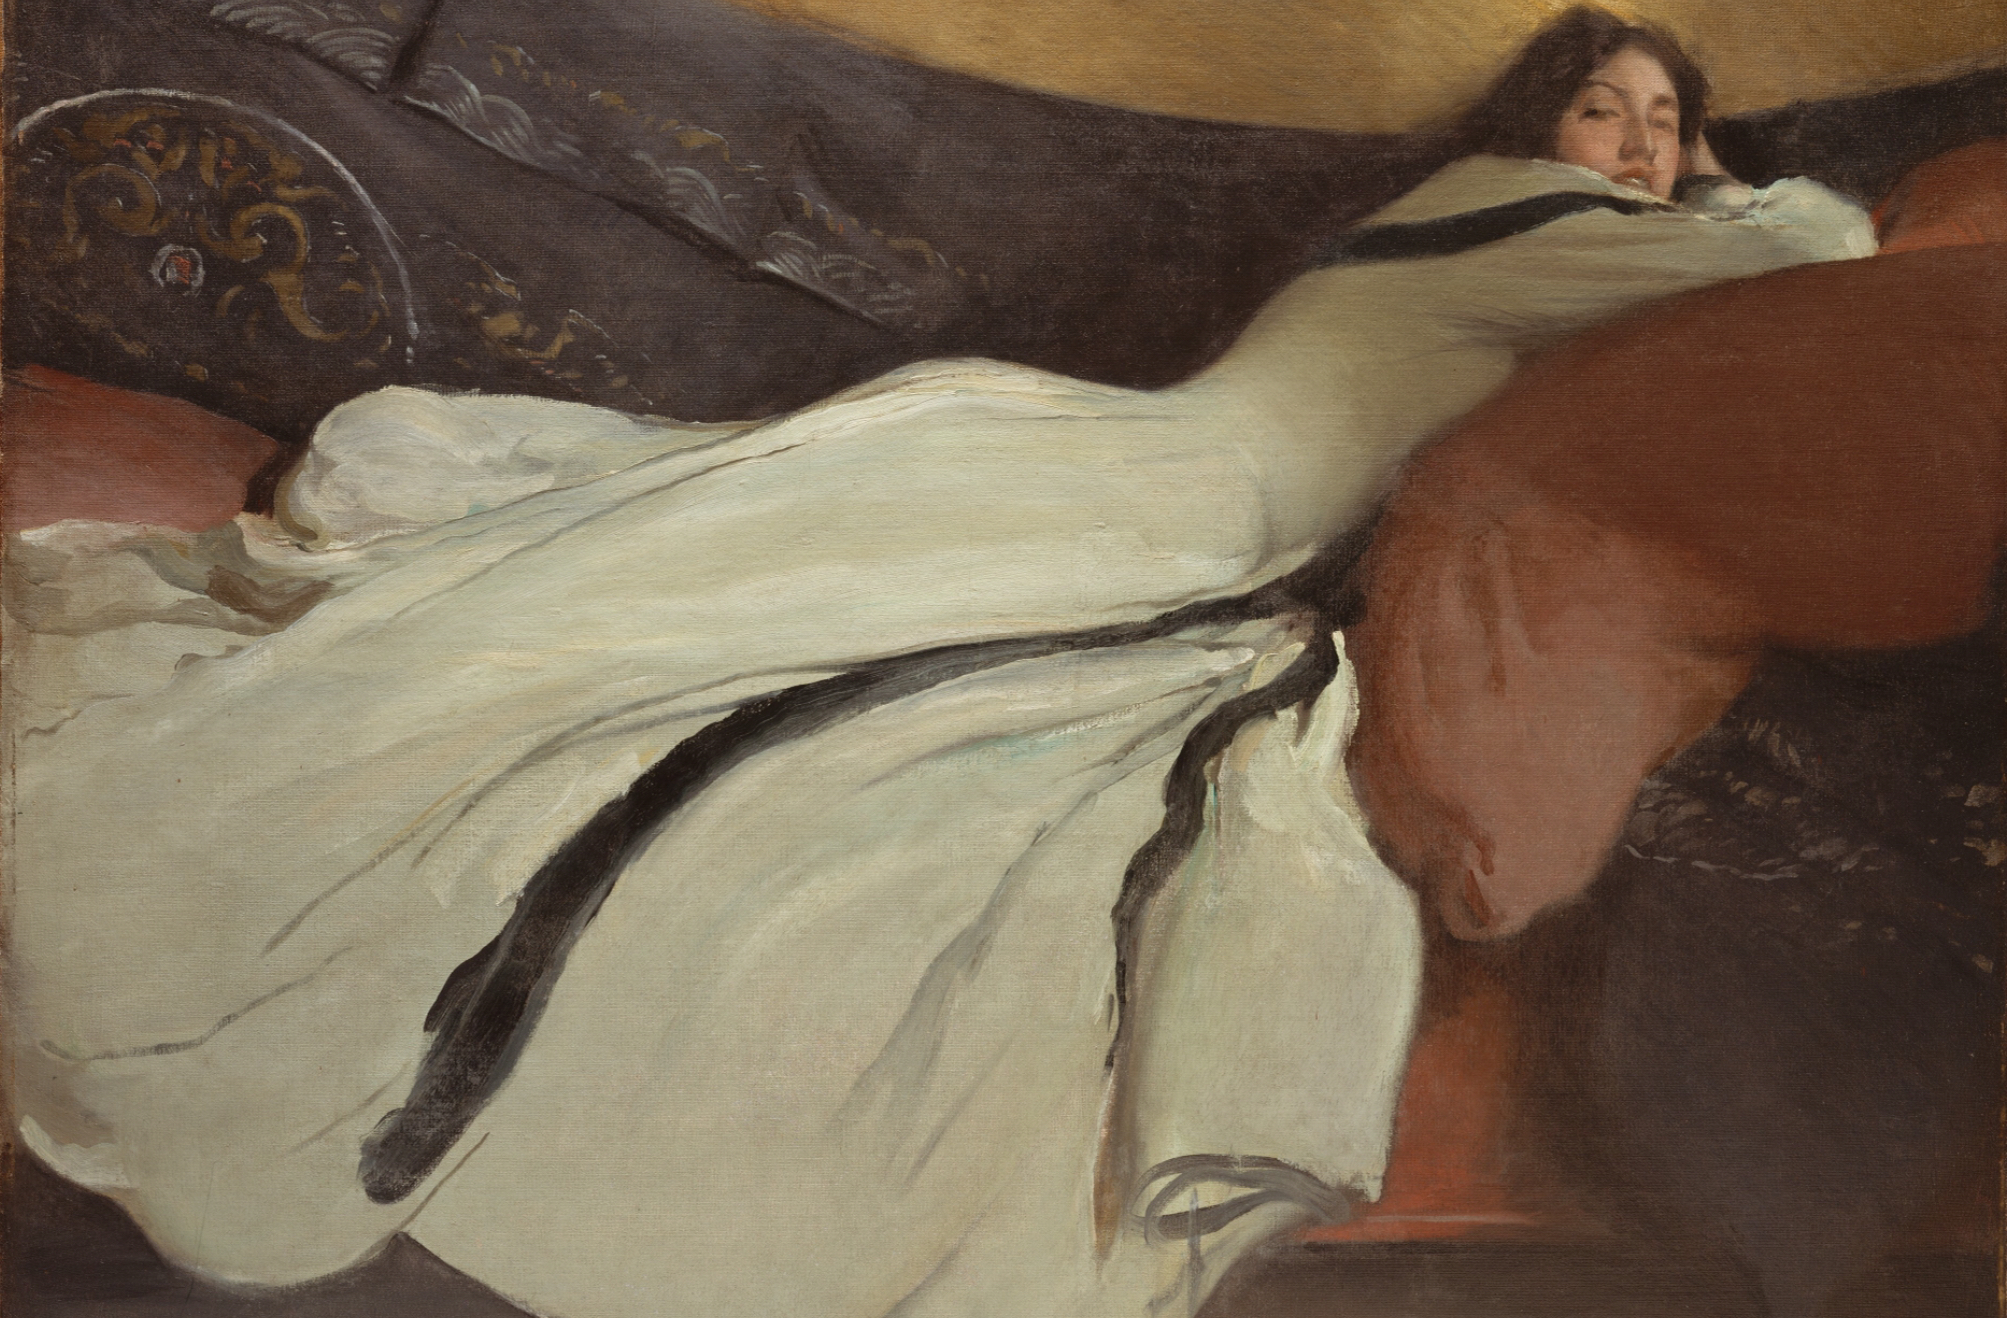 Одмор by John White Alexander - 1895. - 132.7 x 161.6 cm 